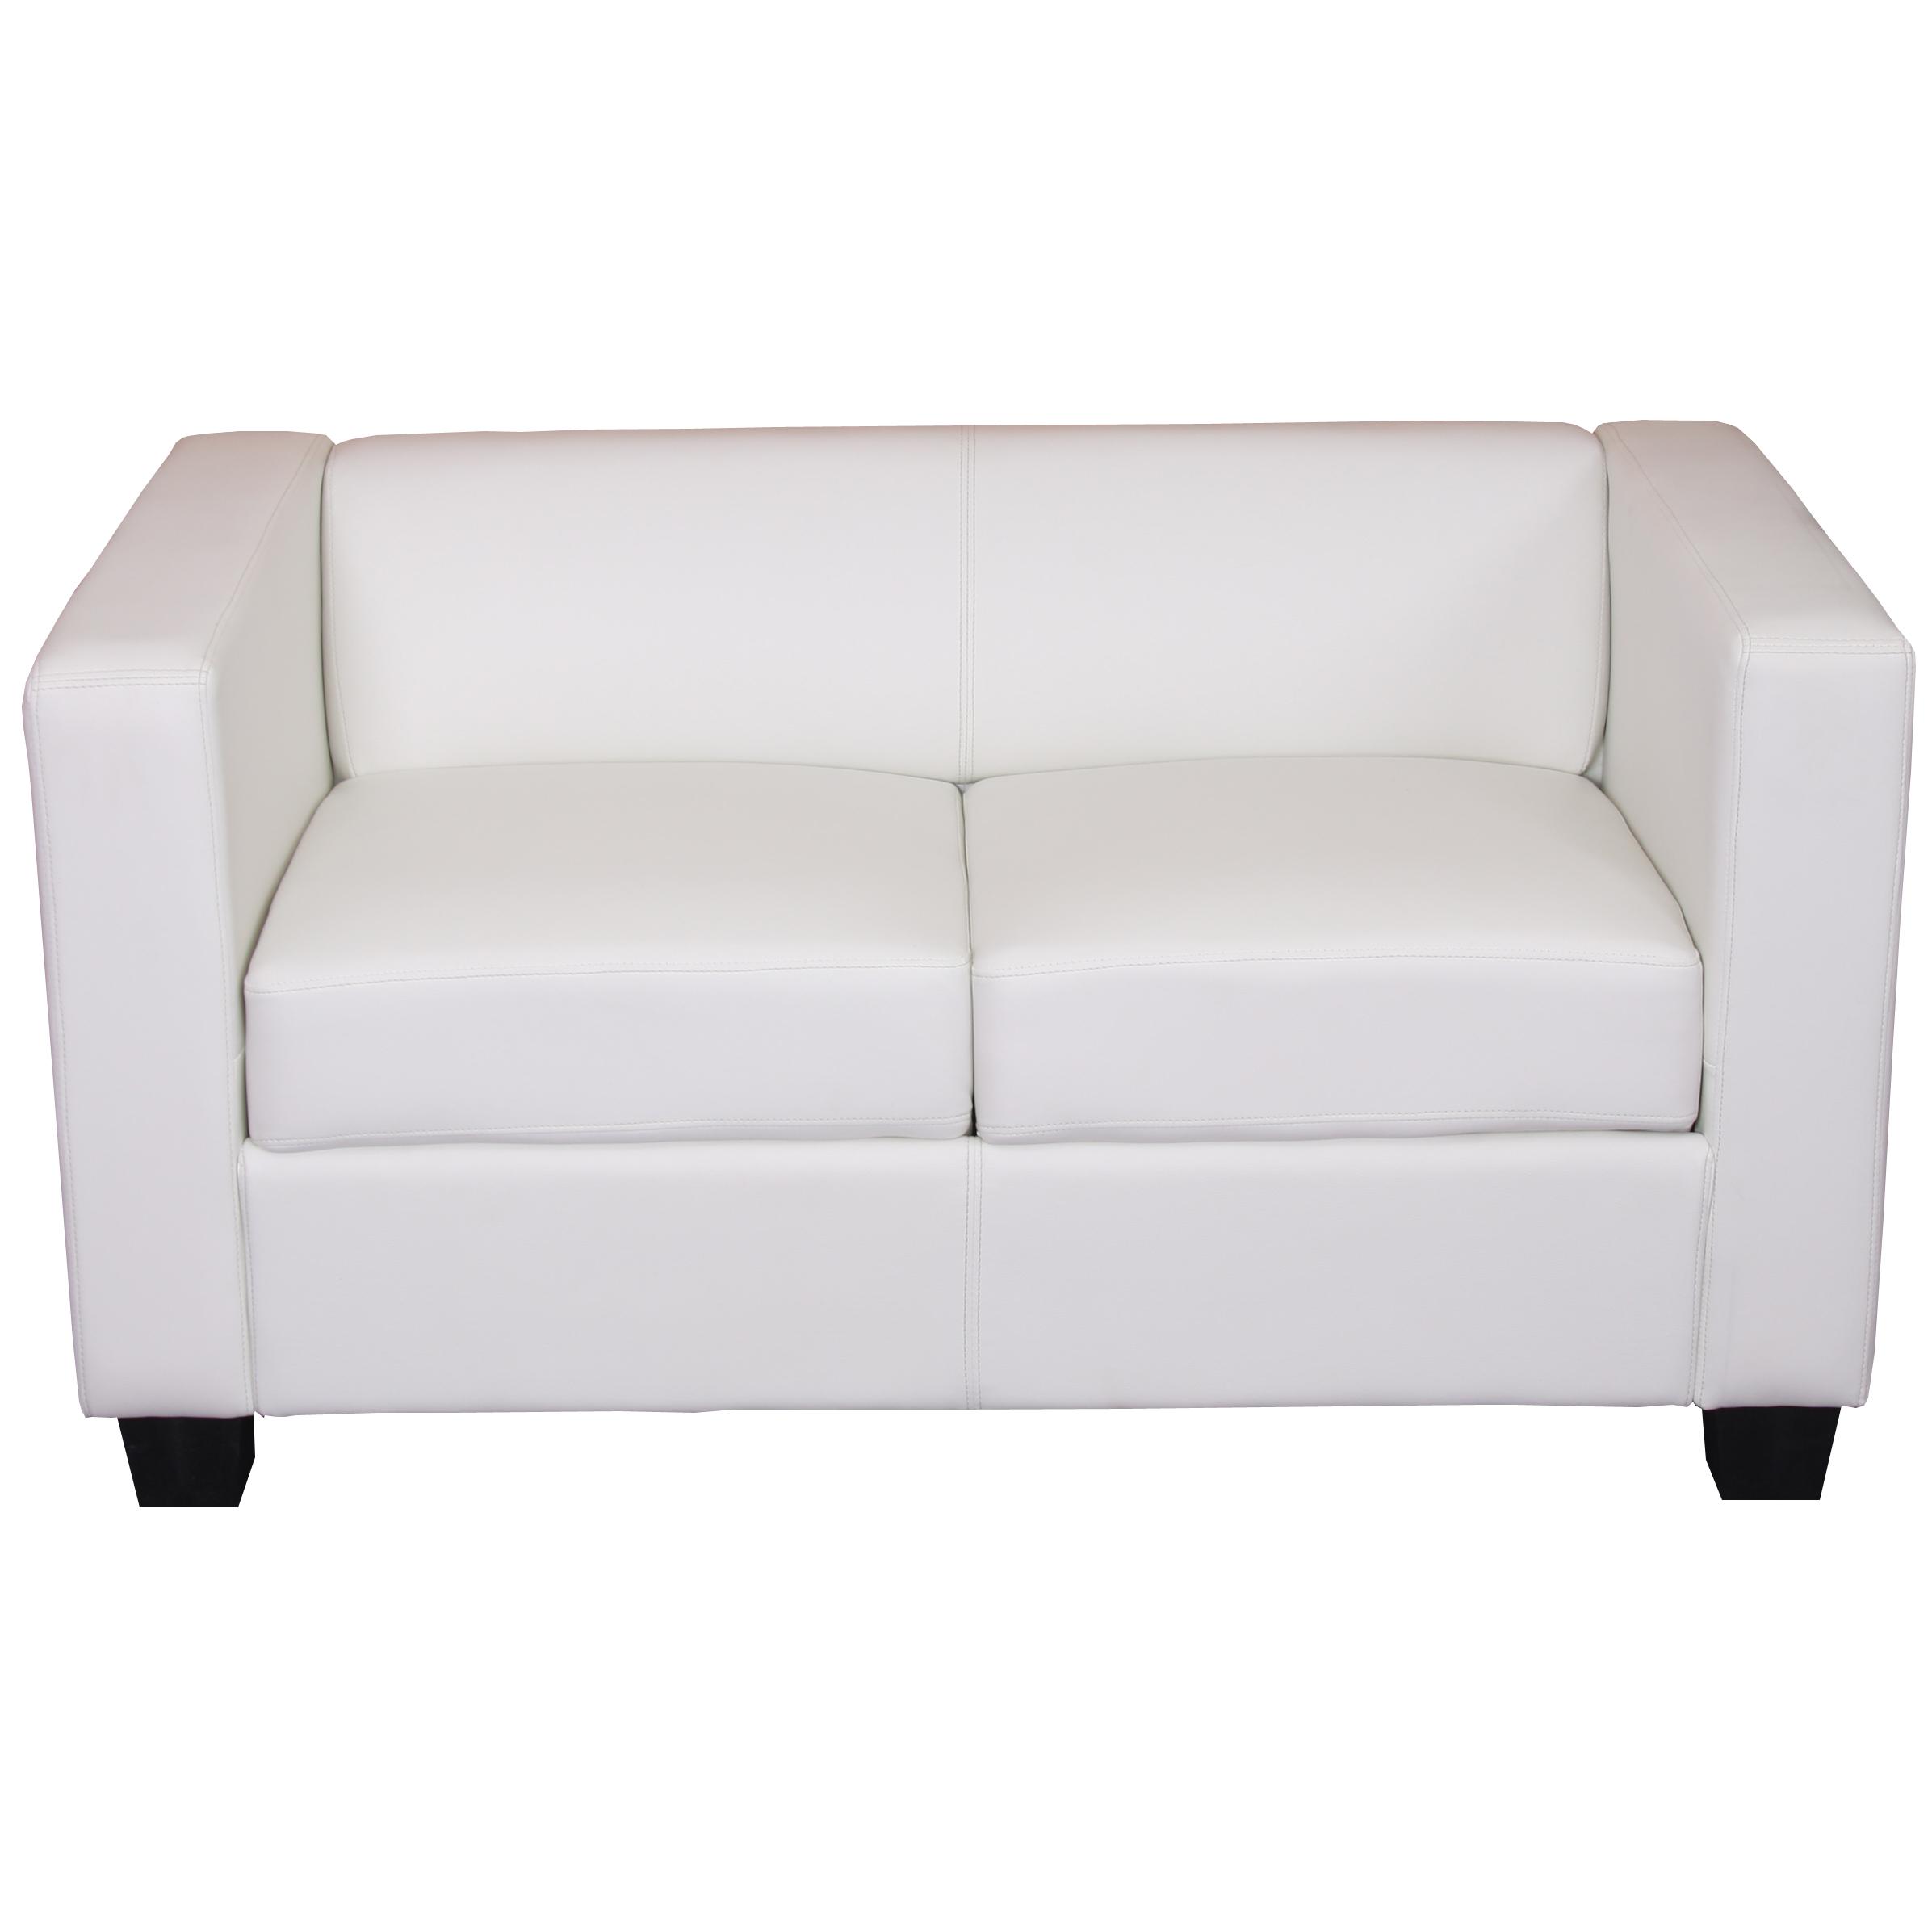 Sessel BASEL, Zweisitzer, elegantes Design, großer Komfort, Leder, Farbe Weiß